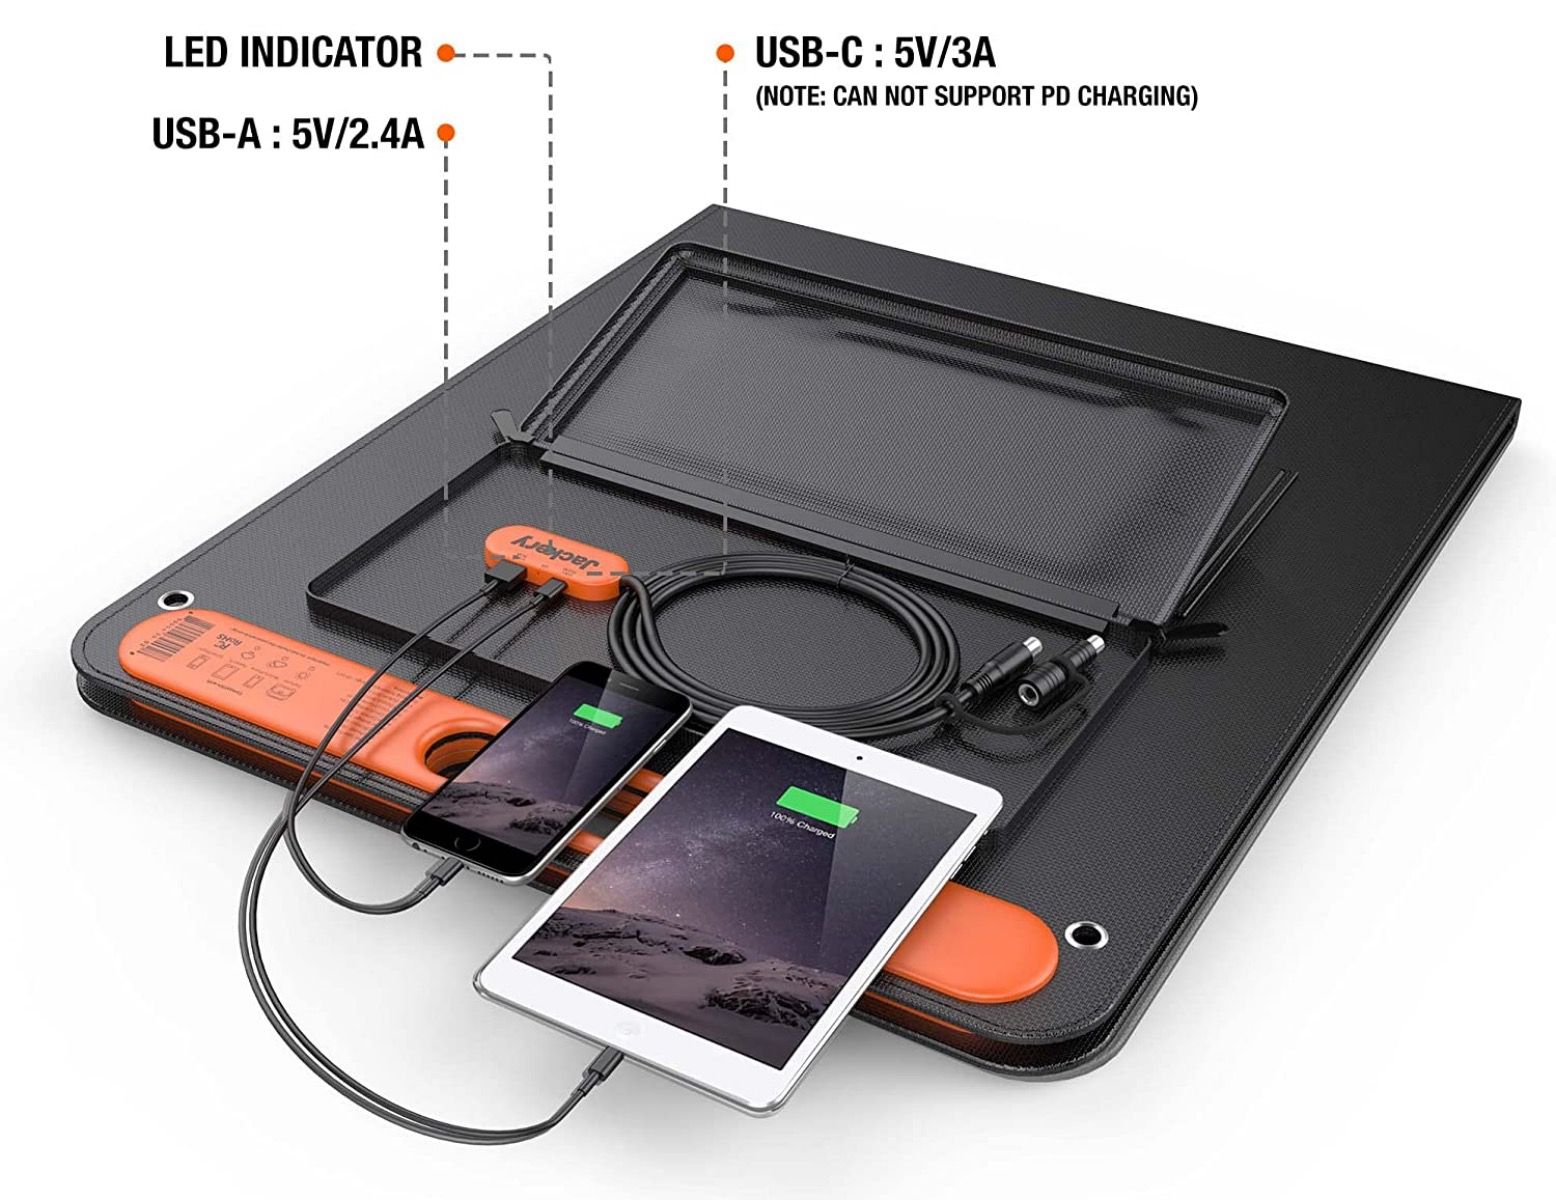 Jackery SolarSaga 100W صاف خوابیده و تلفن همراه و تبلت را از طریق پورت USB شارژ می کند